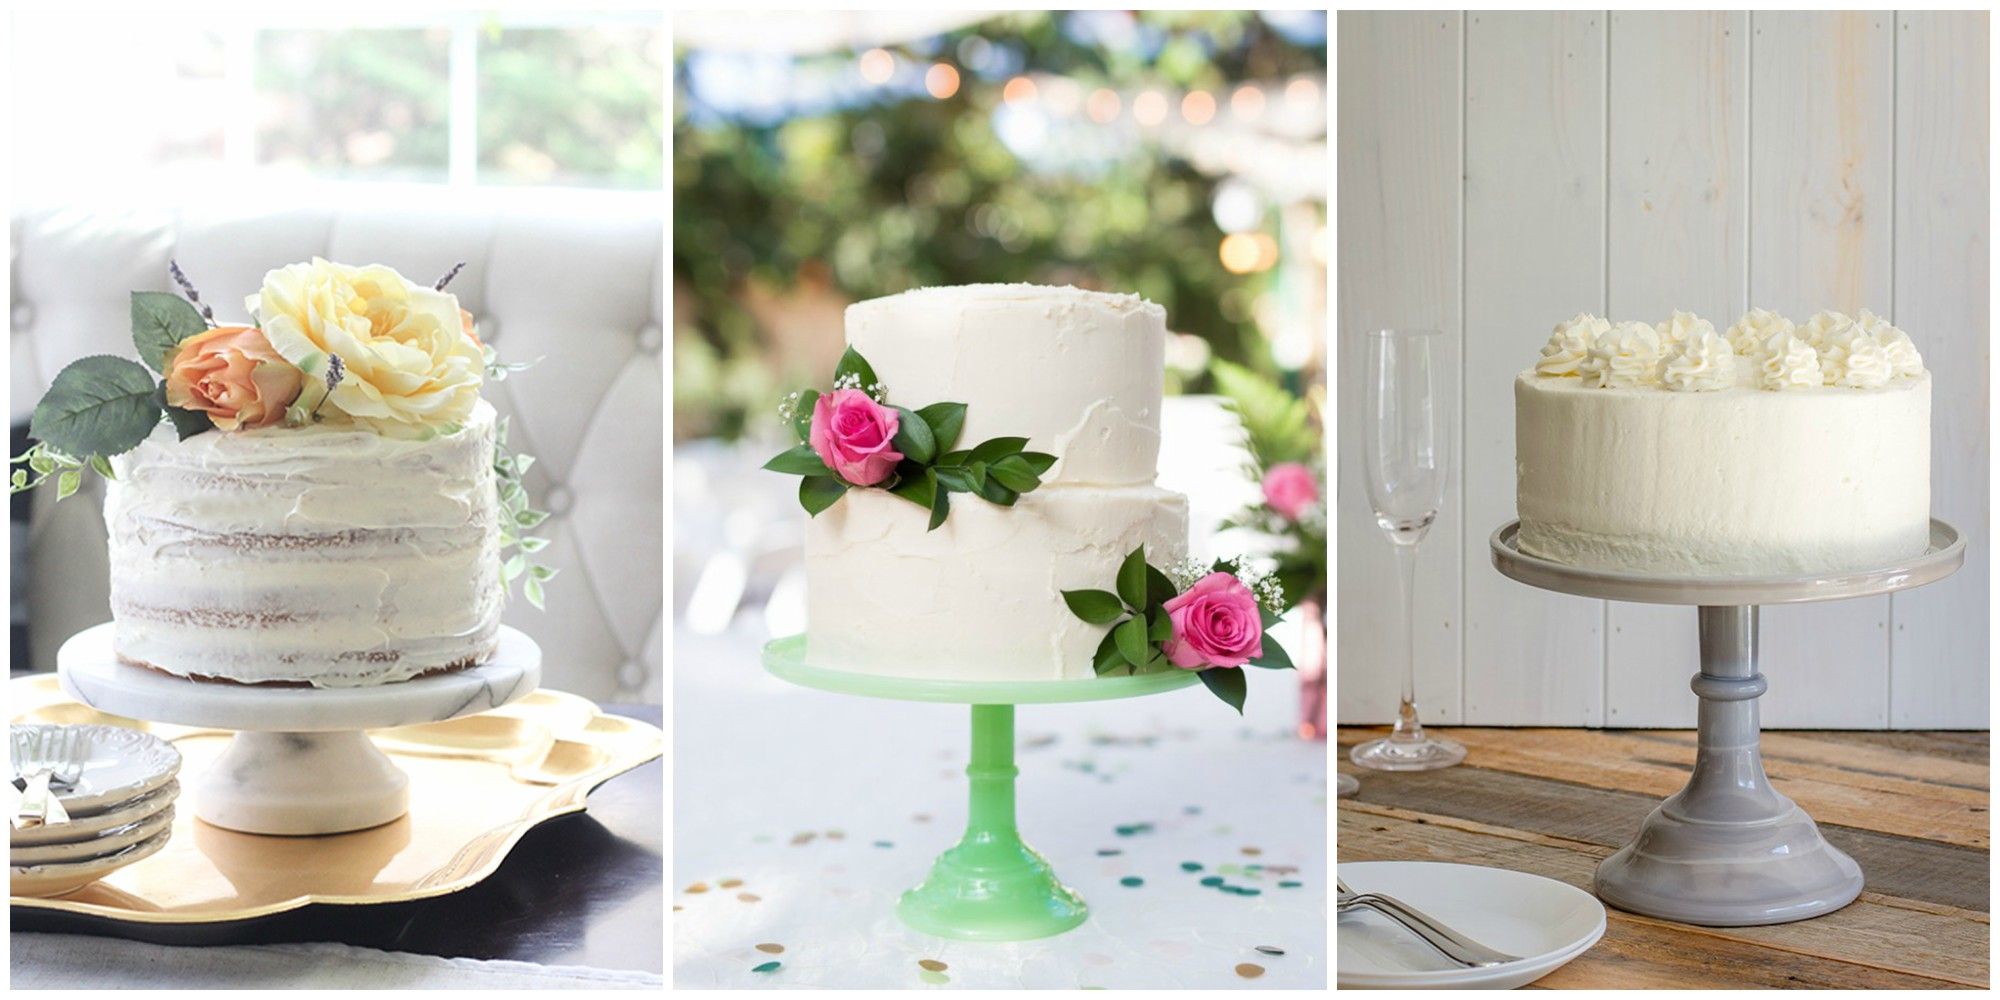 machsrichtig.com | Wedding dessert table, Wedding cakes, Wedding dessert  table diy